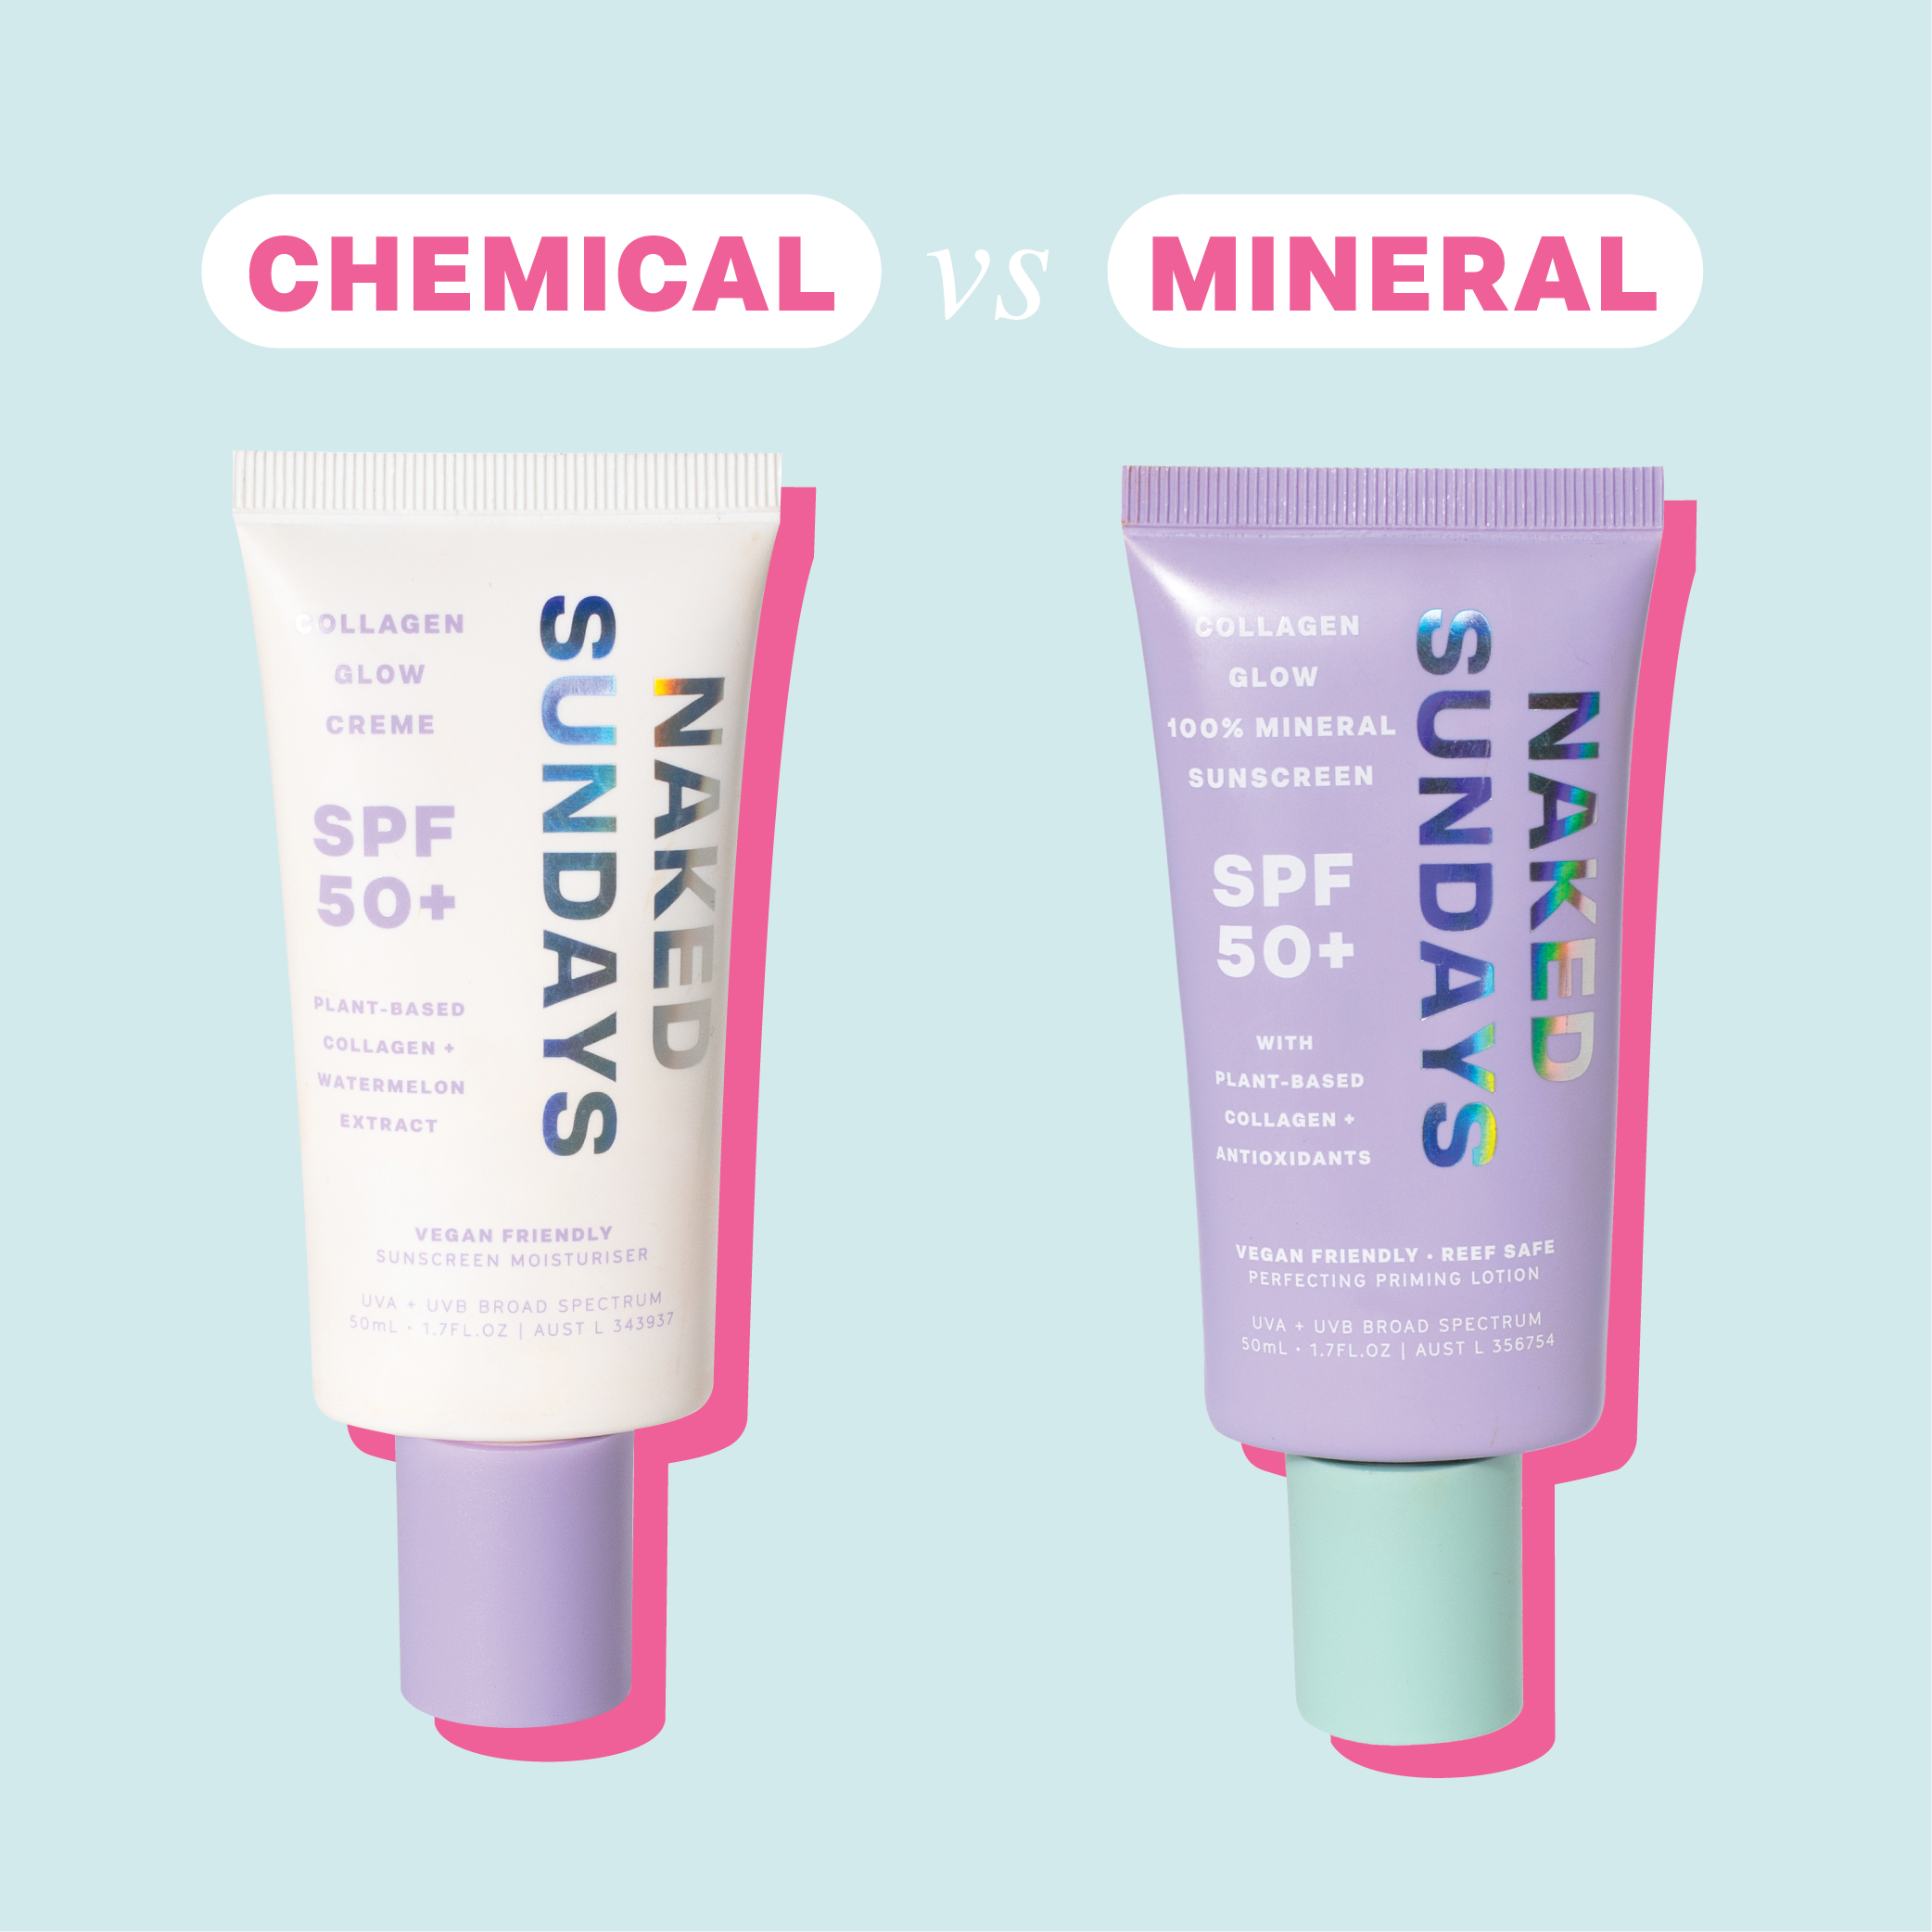 MINERAL Sunscreen vs CHEMICAL Sunscreen | Naked Sundays